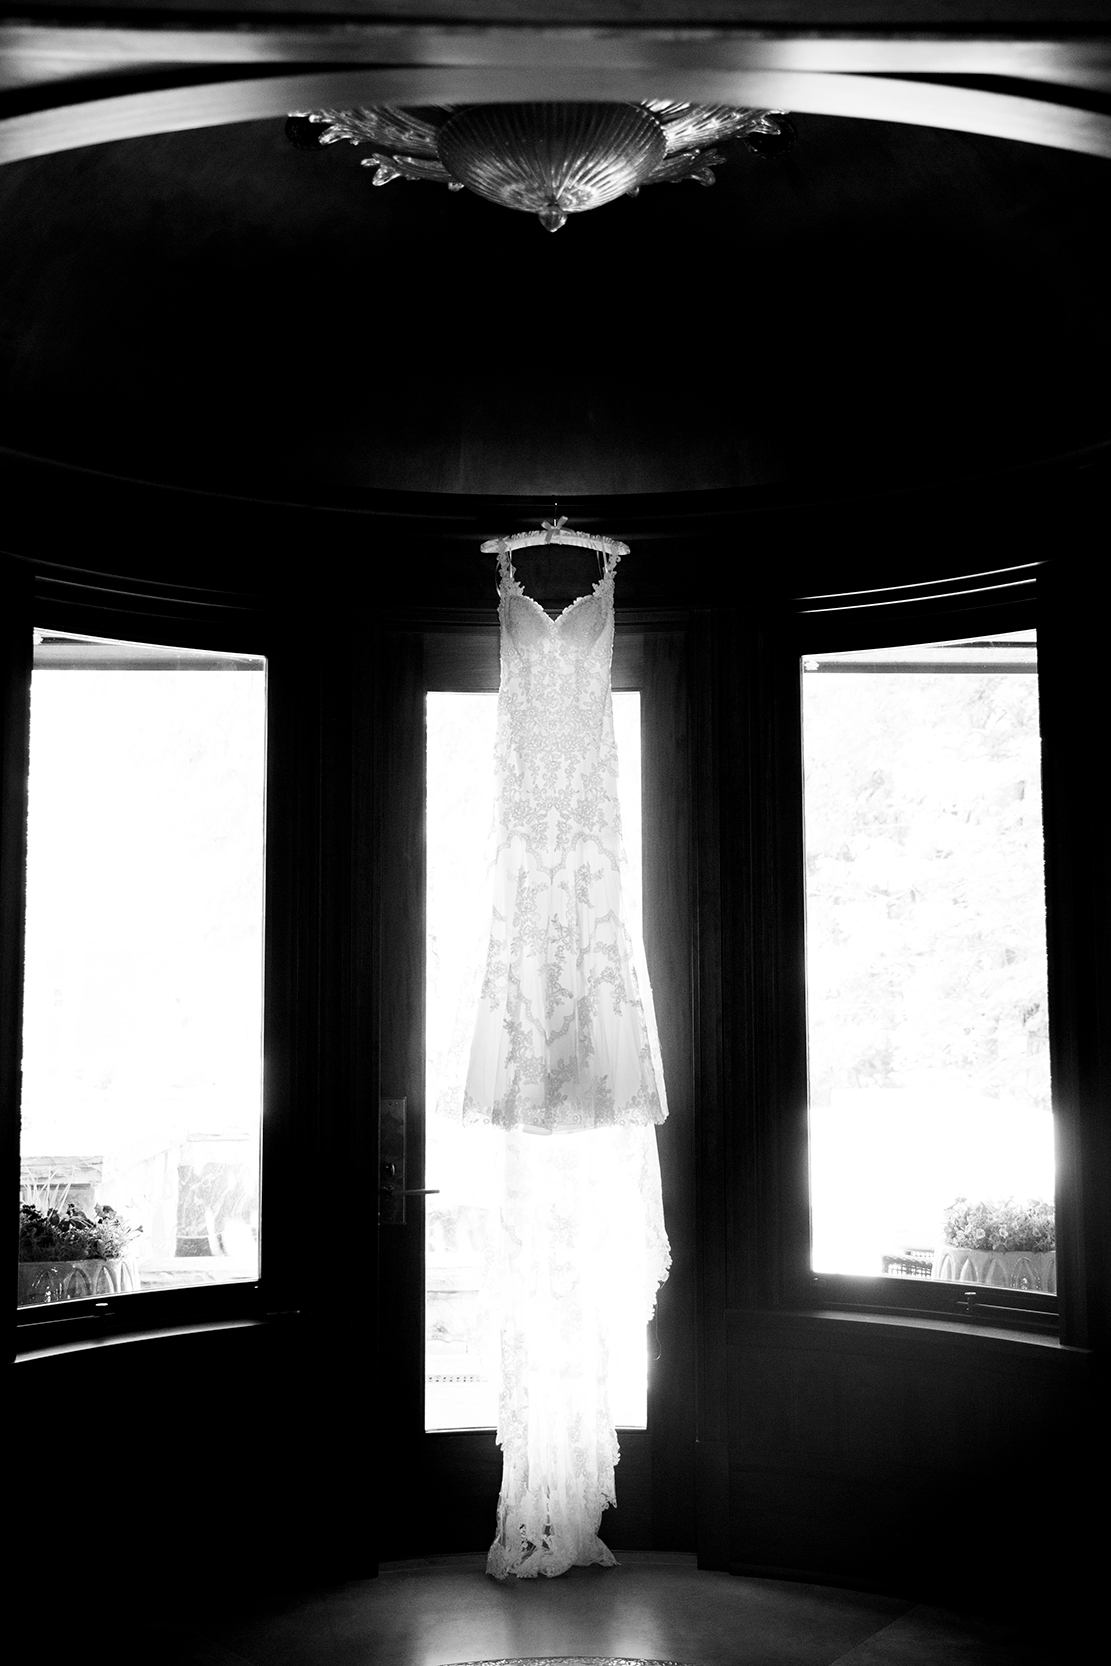 Bridal Details Wedding Inspiration - Image Property of www.j-dphoto.com